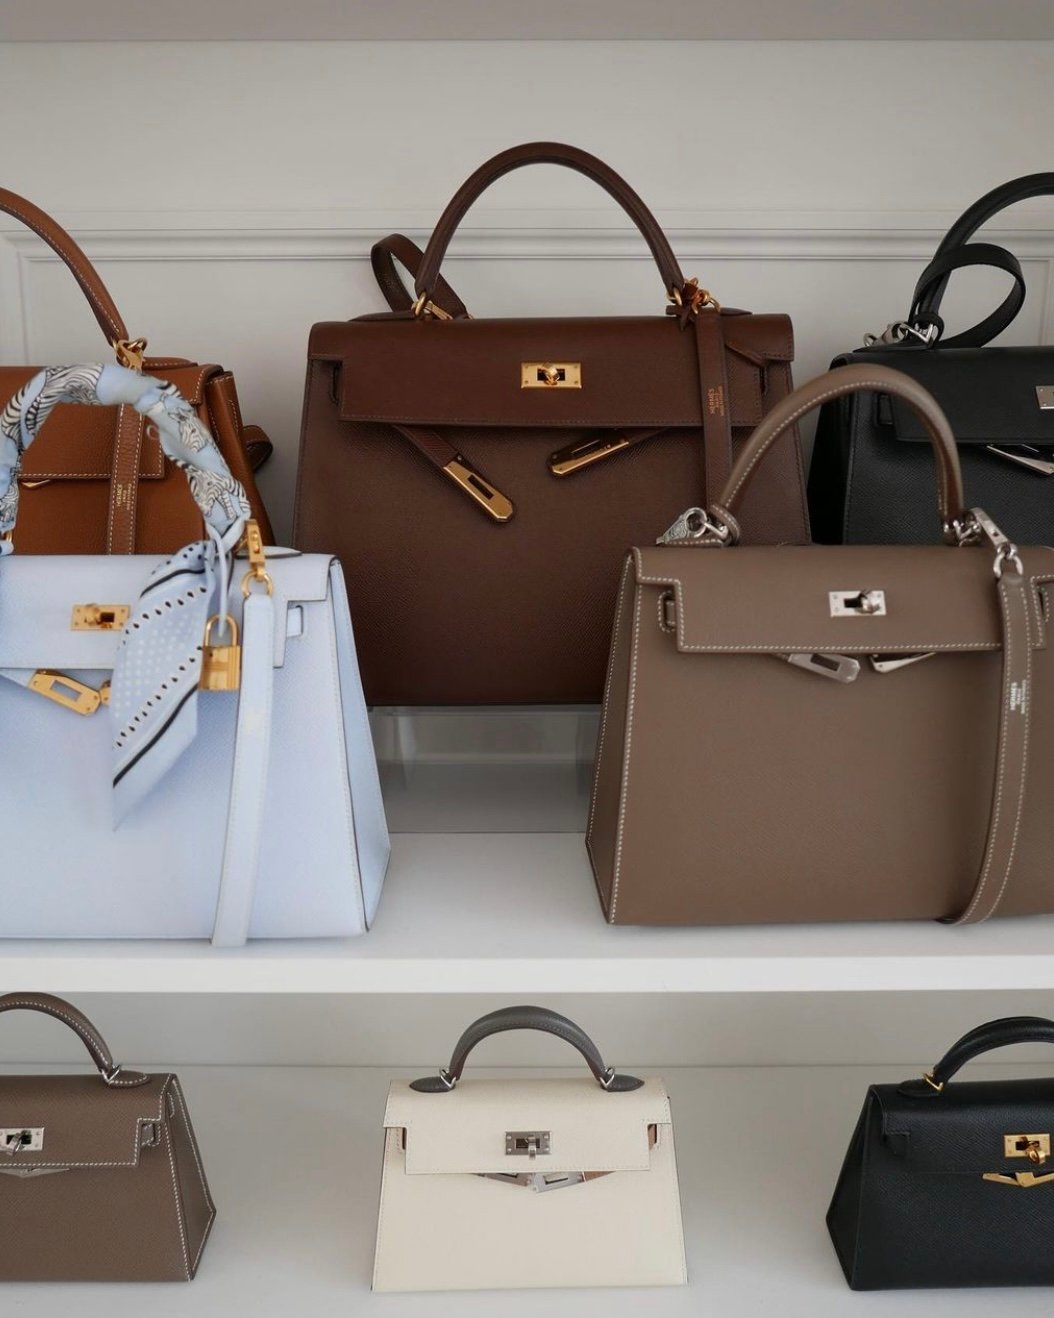 13 Cheapest Louis Vuitton Bags 2022 - Handbagholic